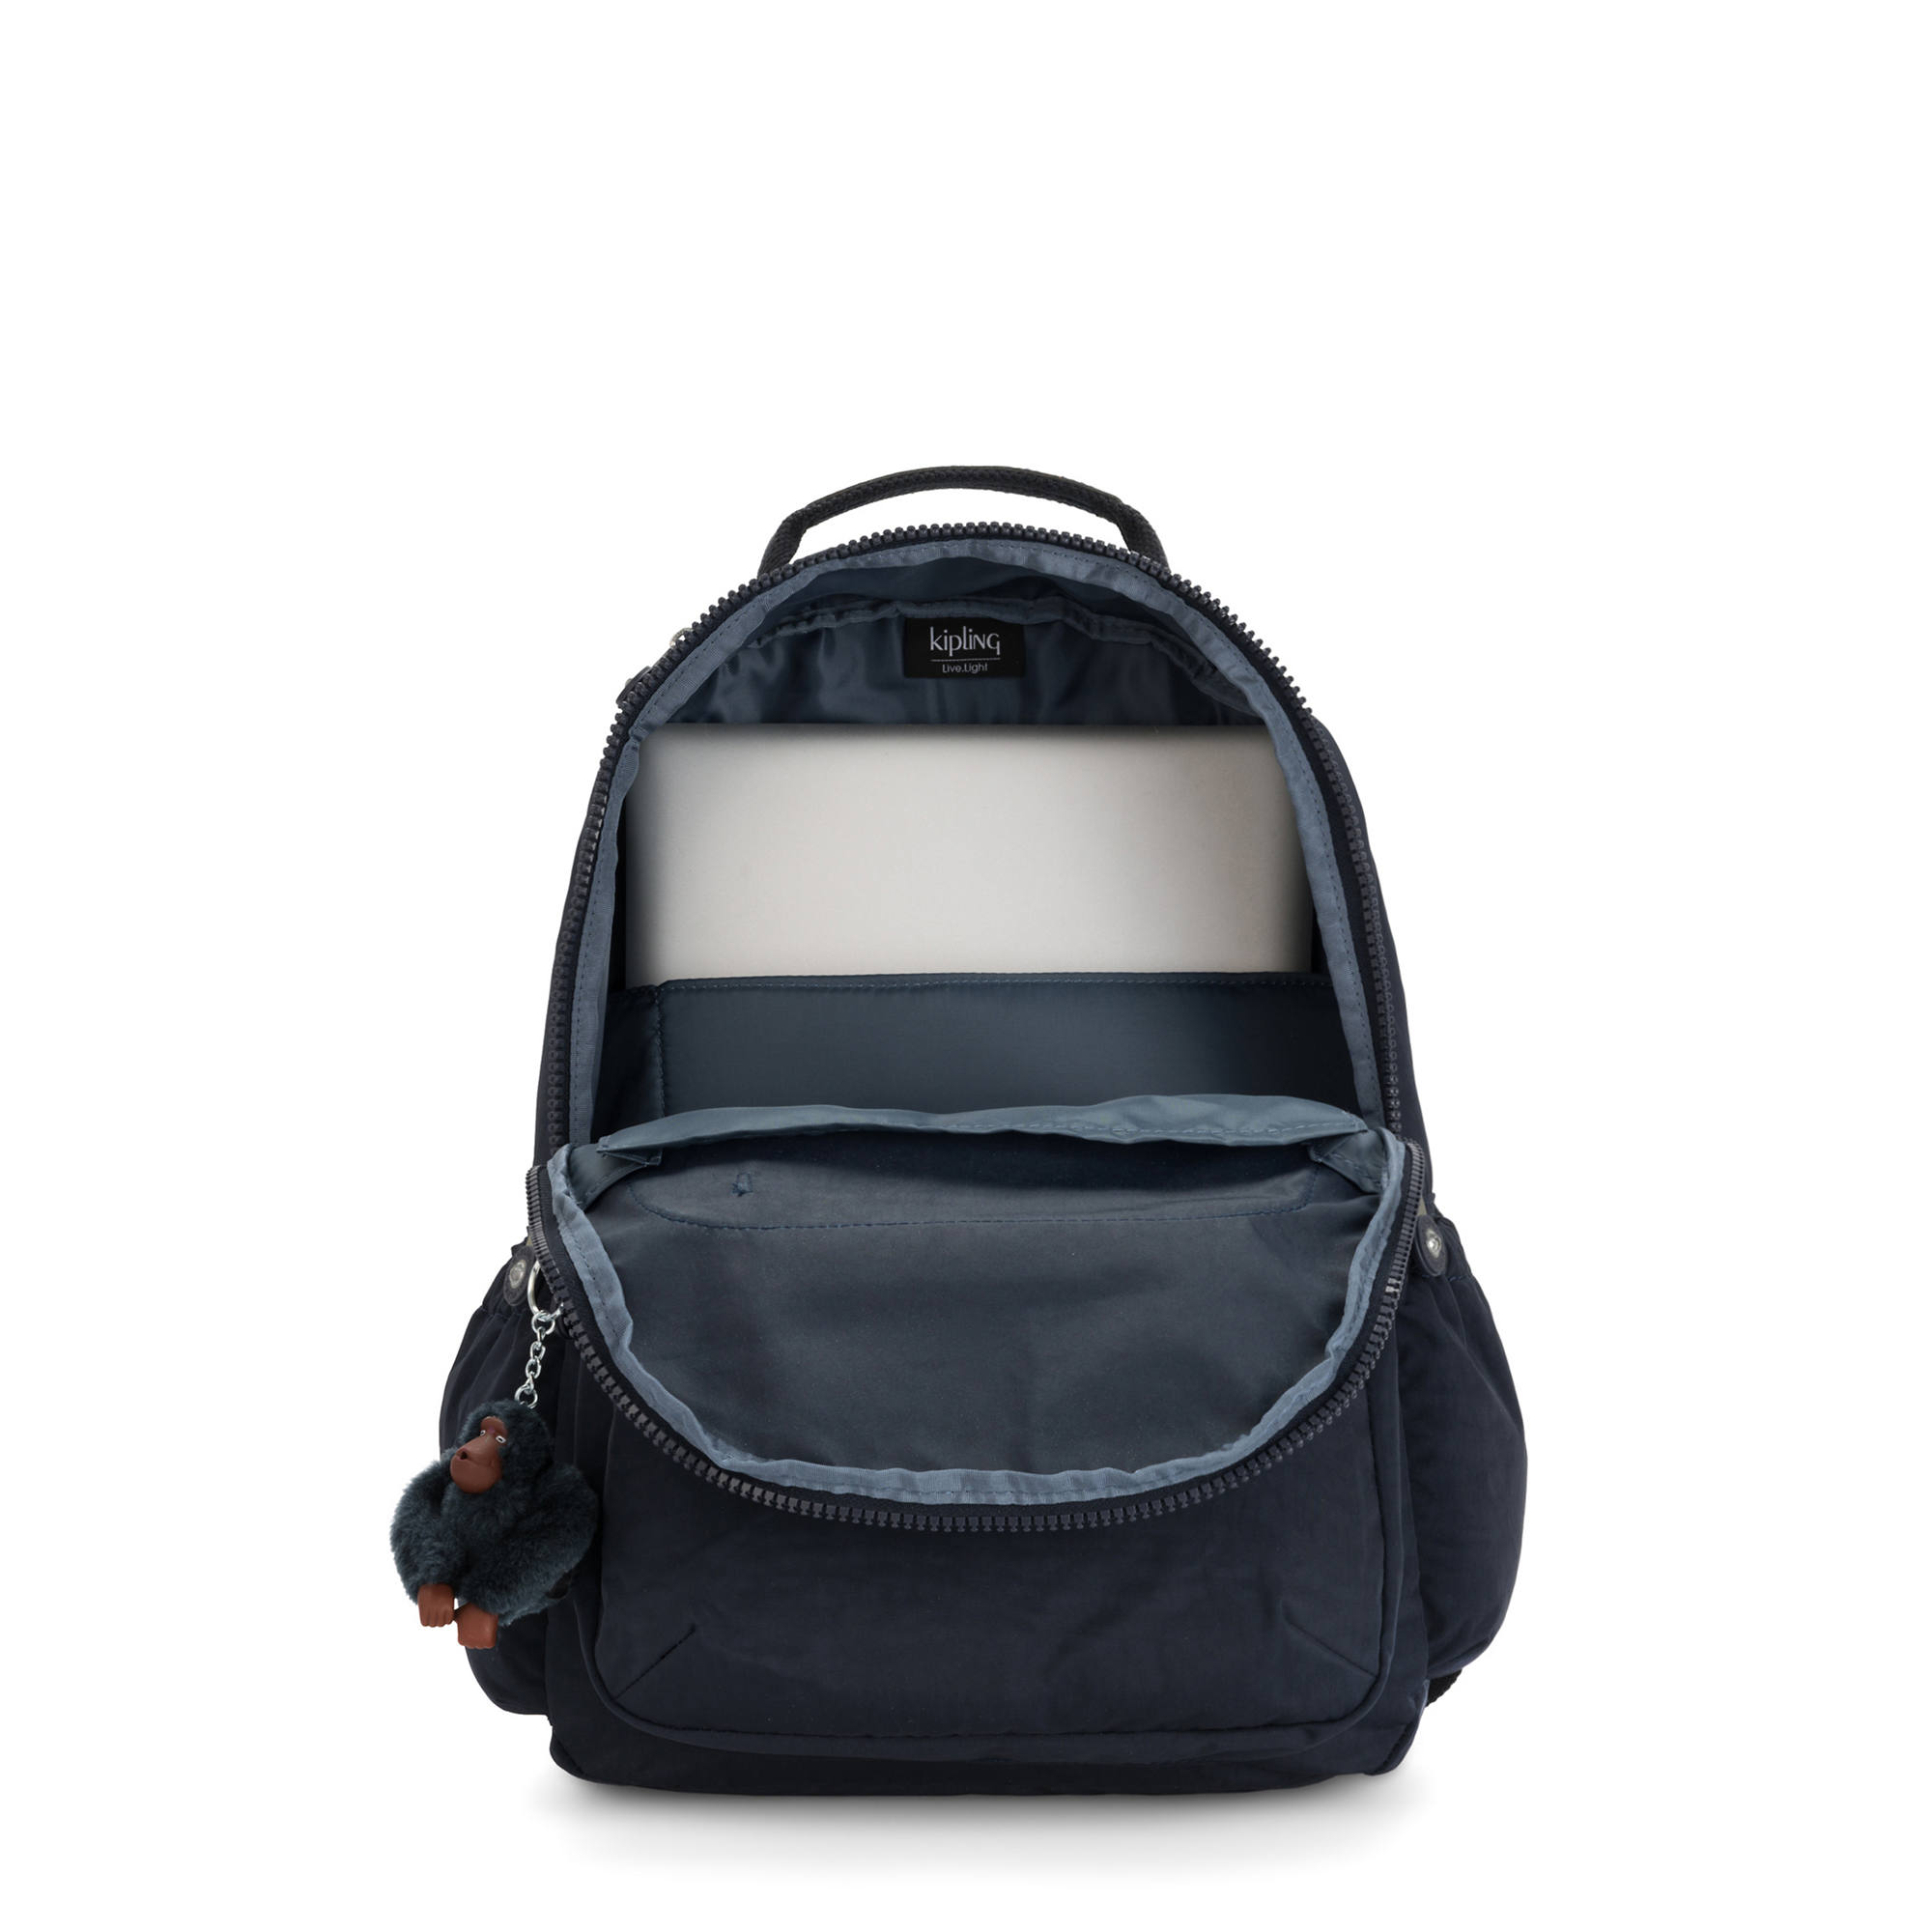 Kipling Seoul Large 15 Laptop Backpack/Lime Green/Water Resistant